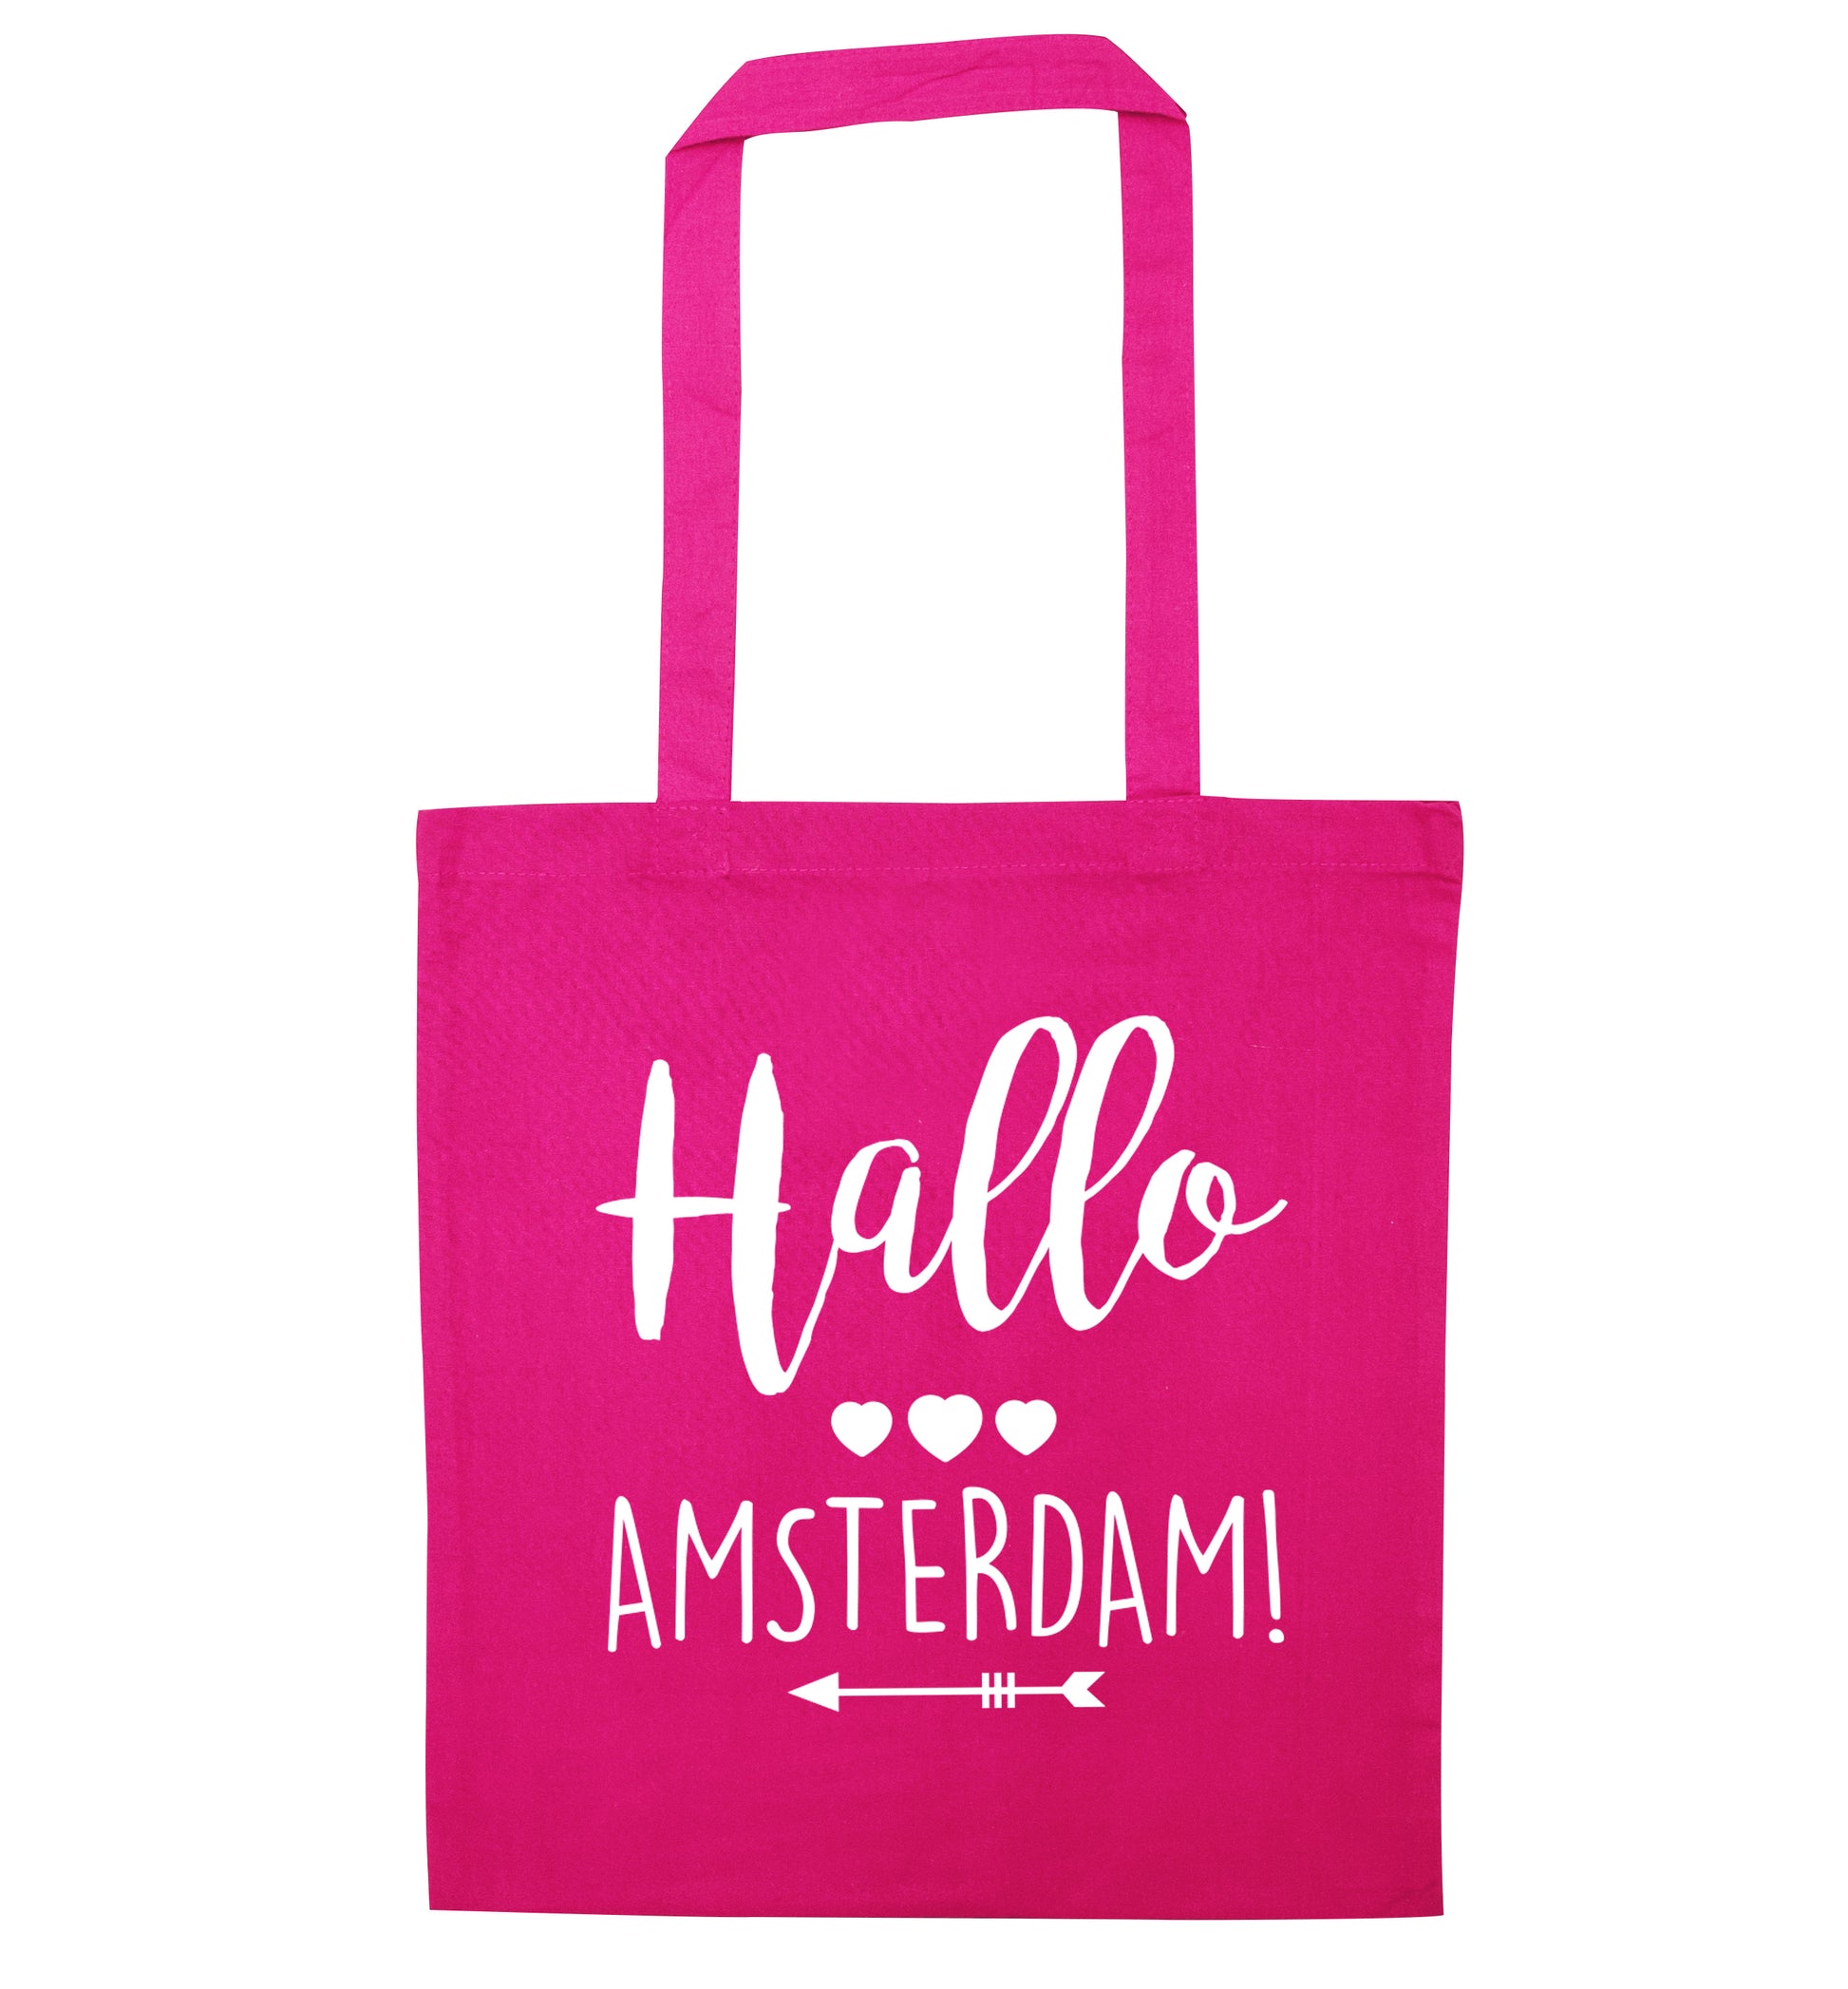 Hallo Amsterdam pink tote bag